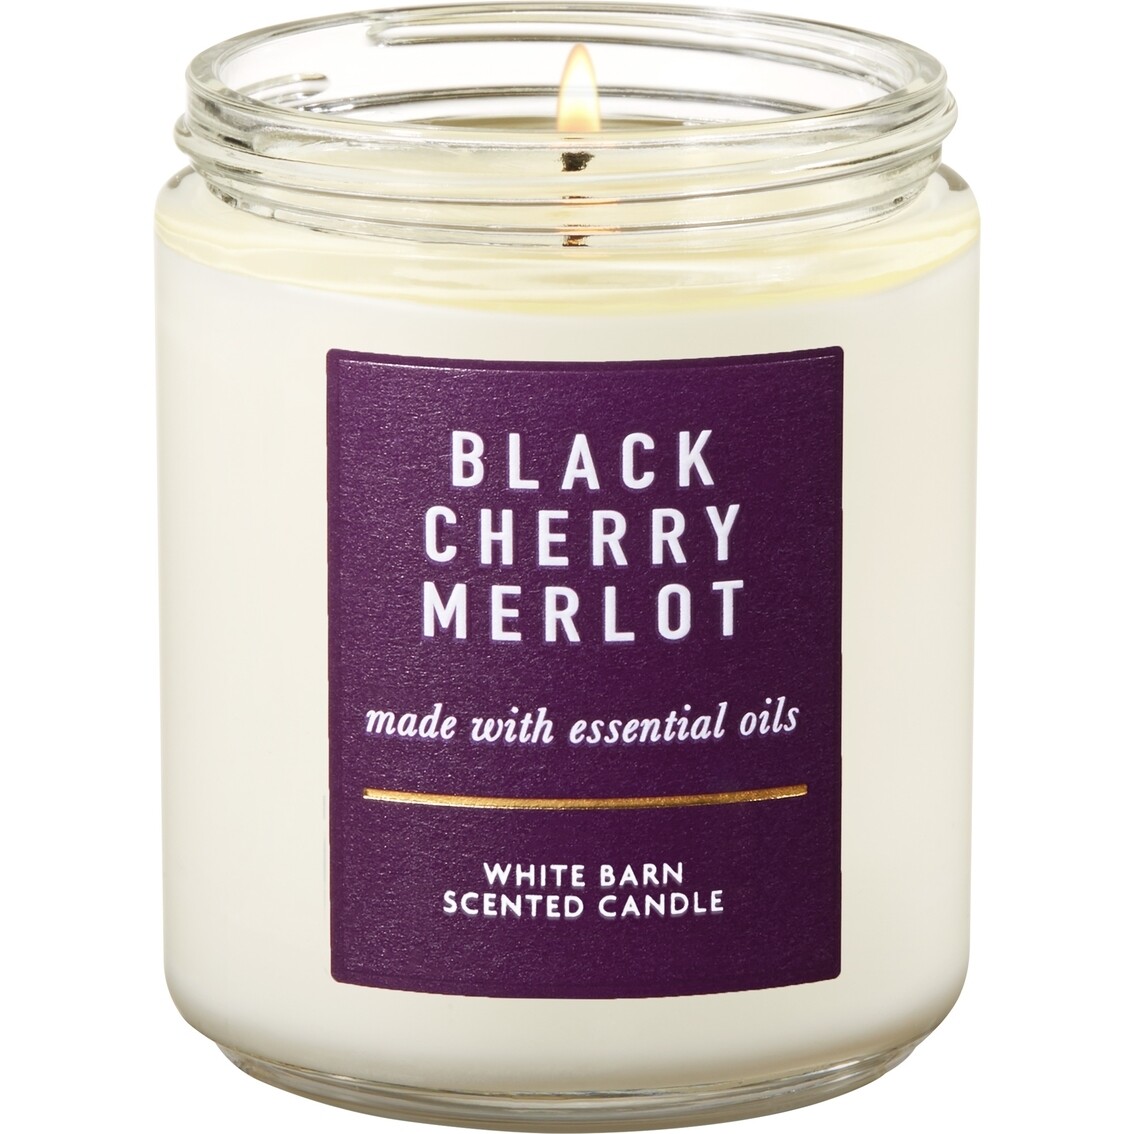 Bath and body works single wick candle- black cherry merlot